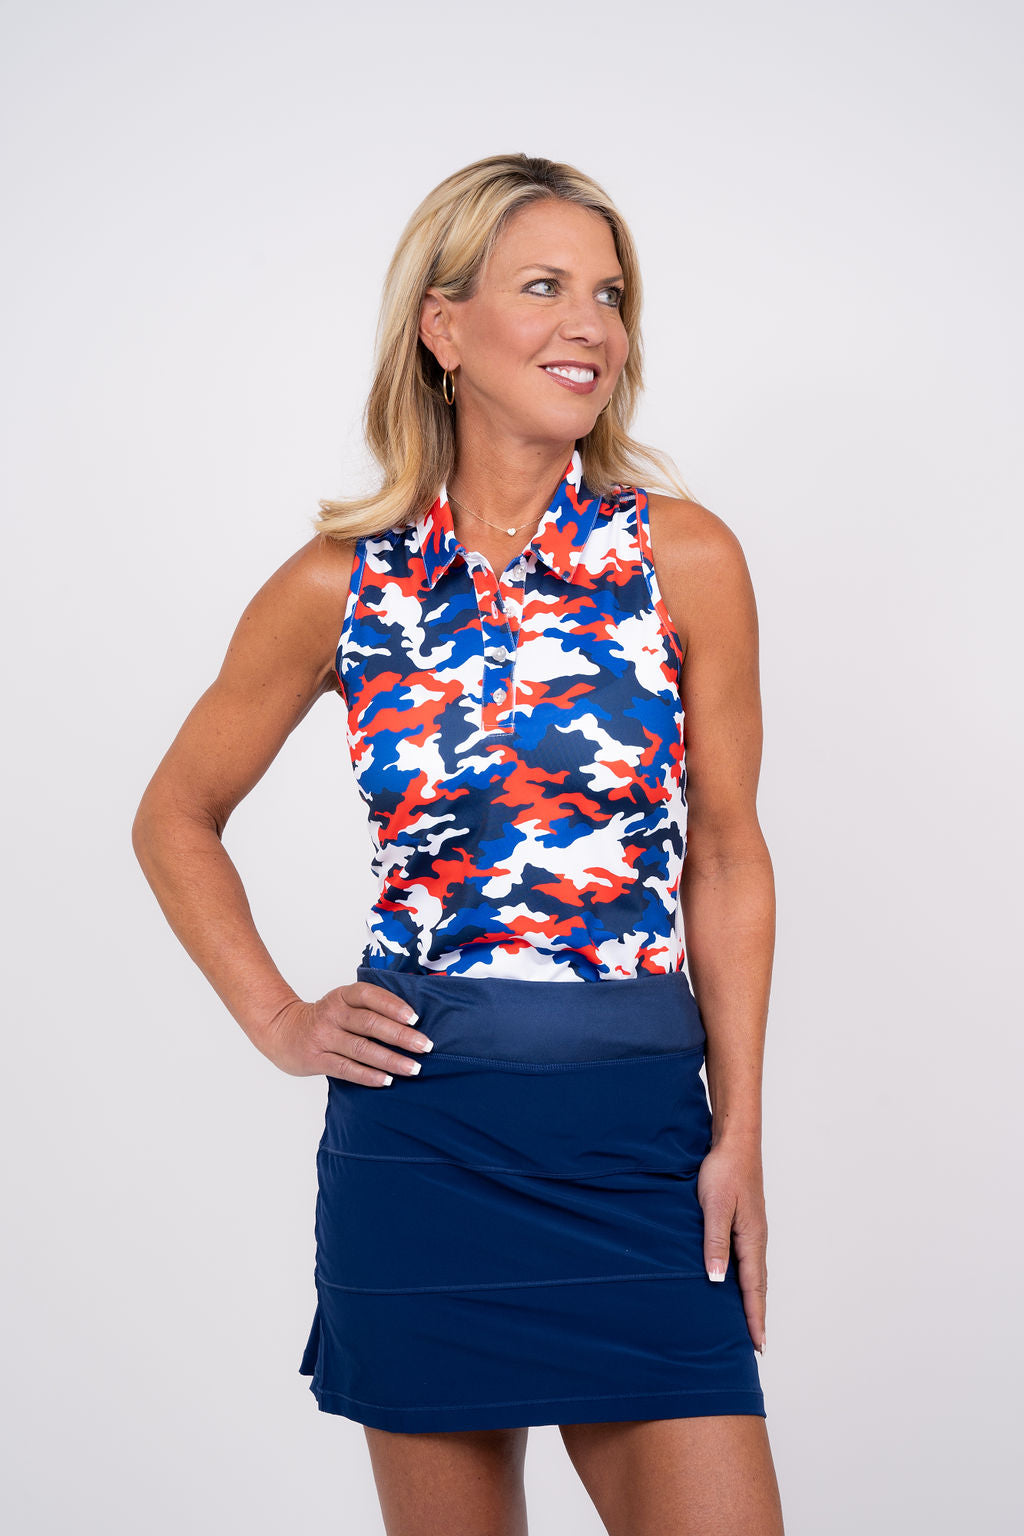 Racerback Golf Shirt - Red, White & Blue Women's Golf Shirt Taylor Jordan Apparel 